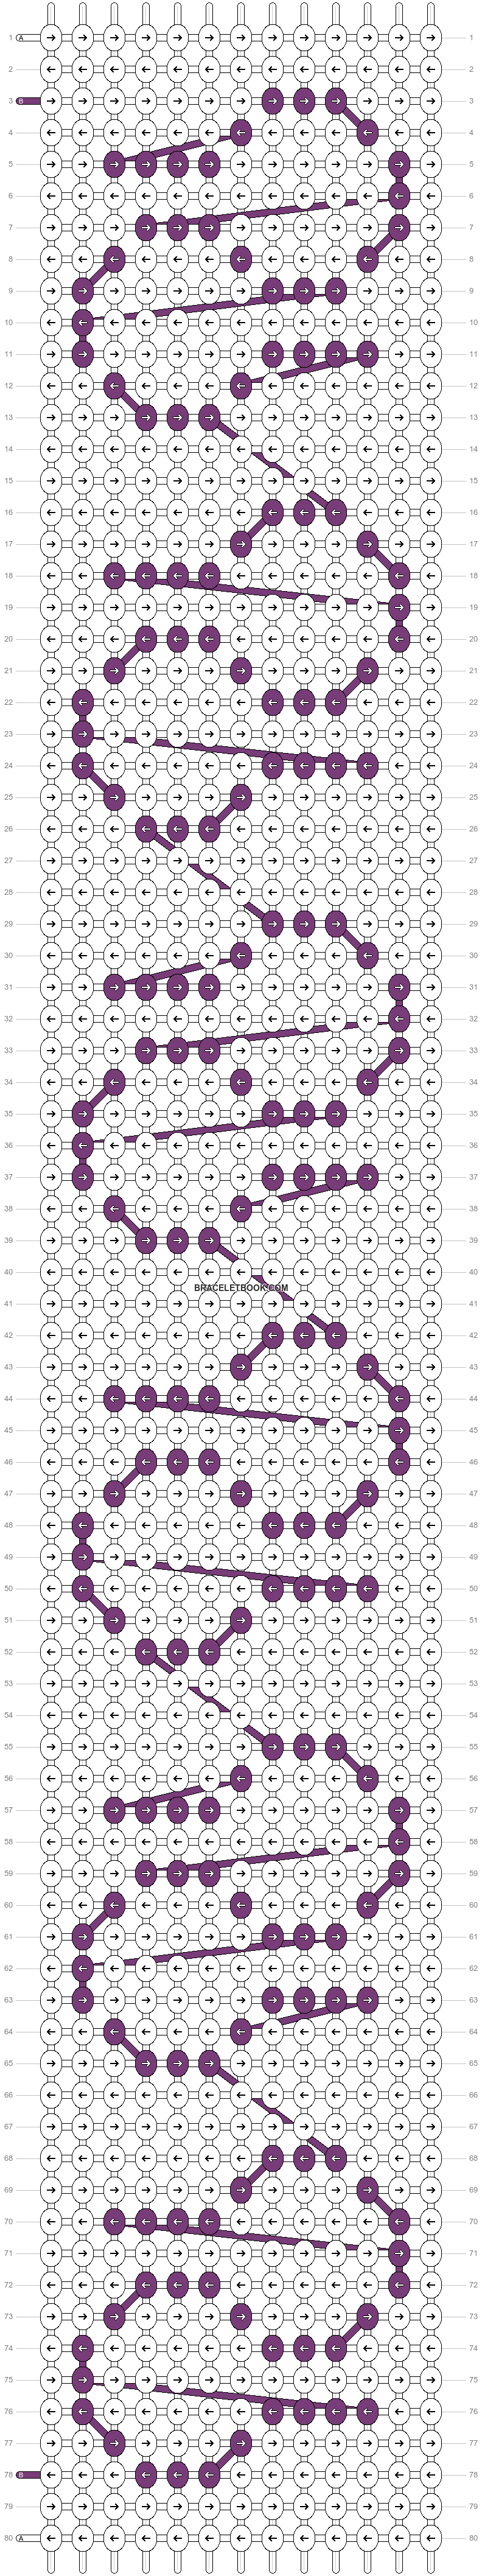 Alpha pattern #43344 pattern